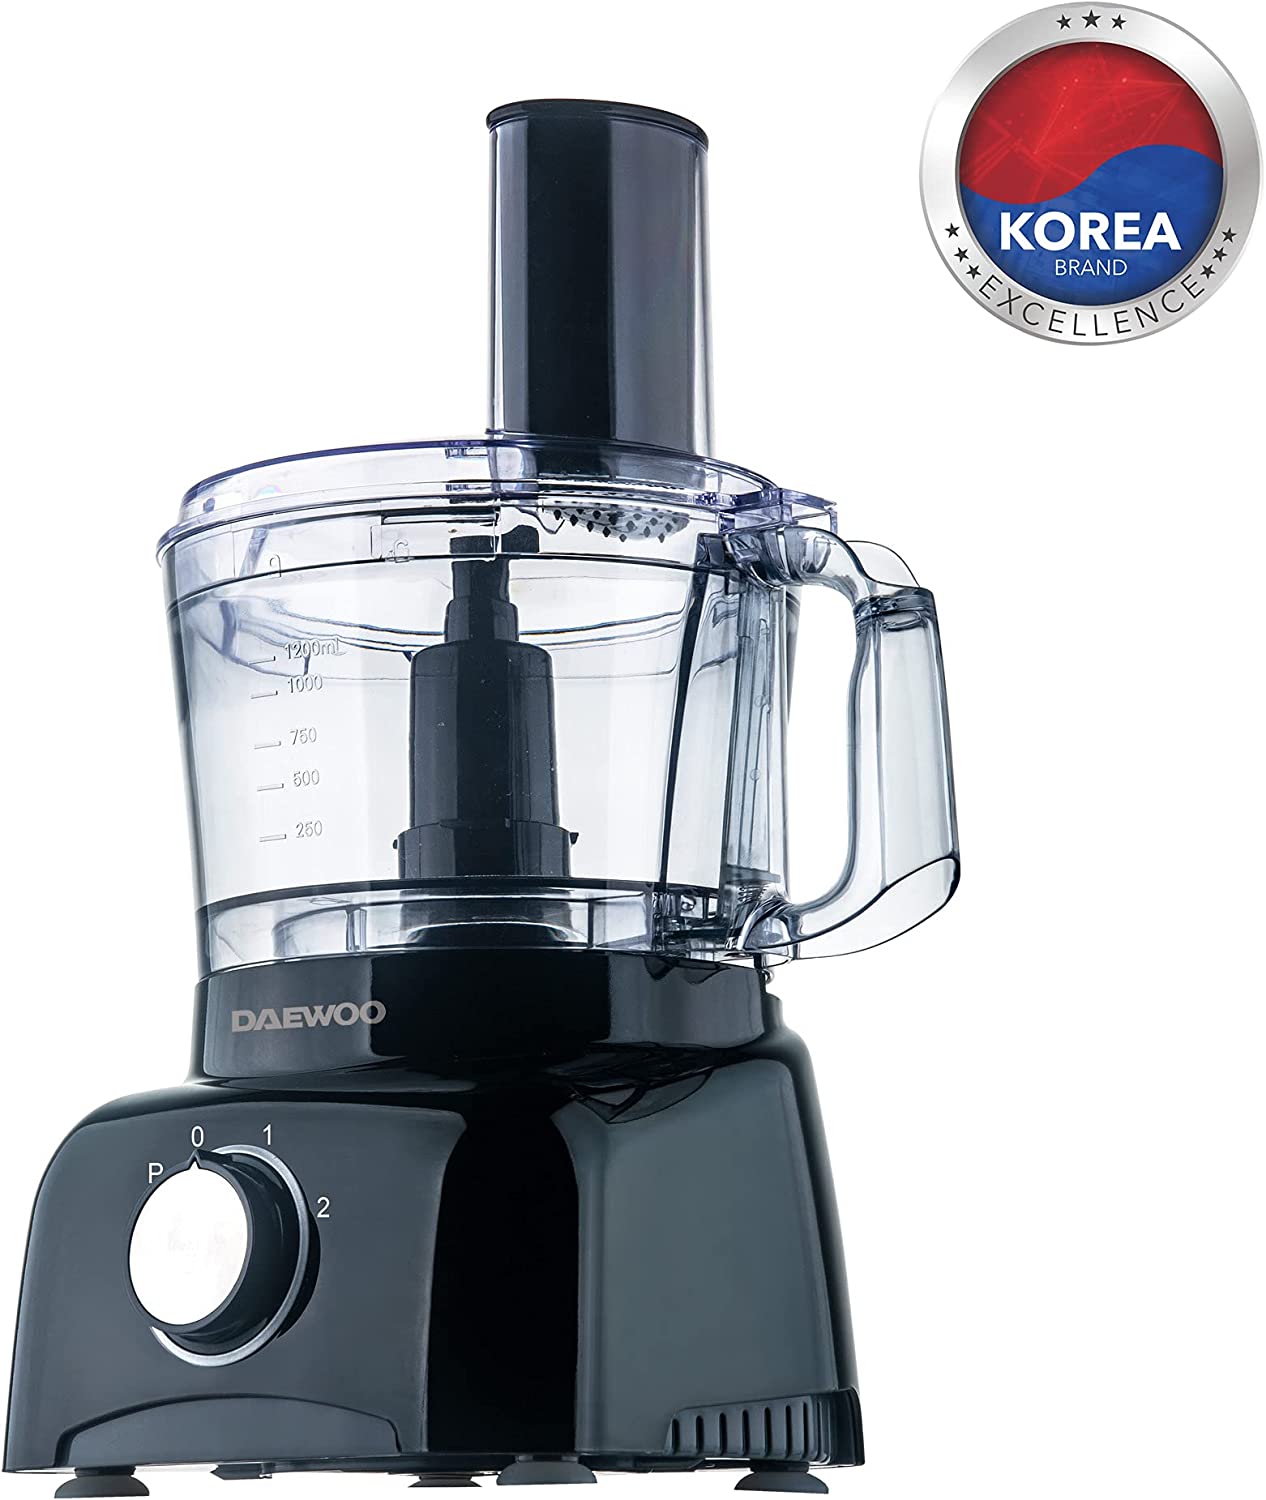 Bundle Set of Daewoo Food Processor 15 Functions 7-in-1 + 1.7 Liter Electric Kettle 2200W Korean Technology